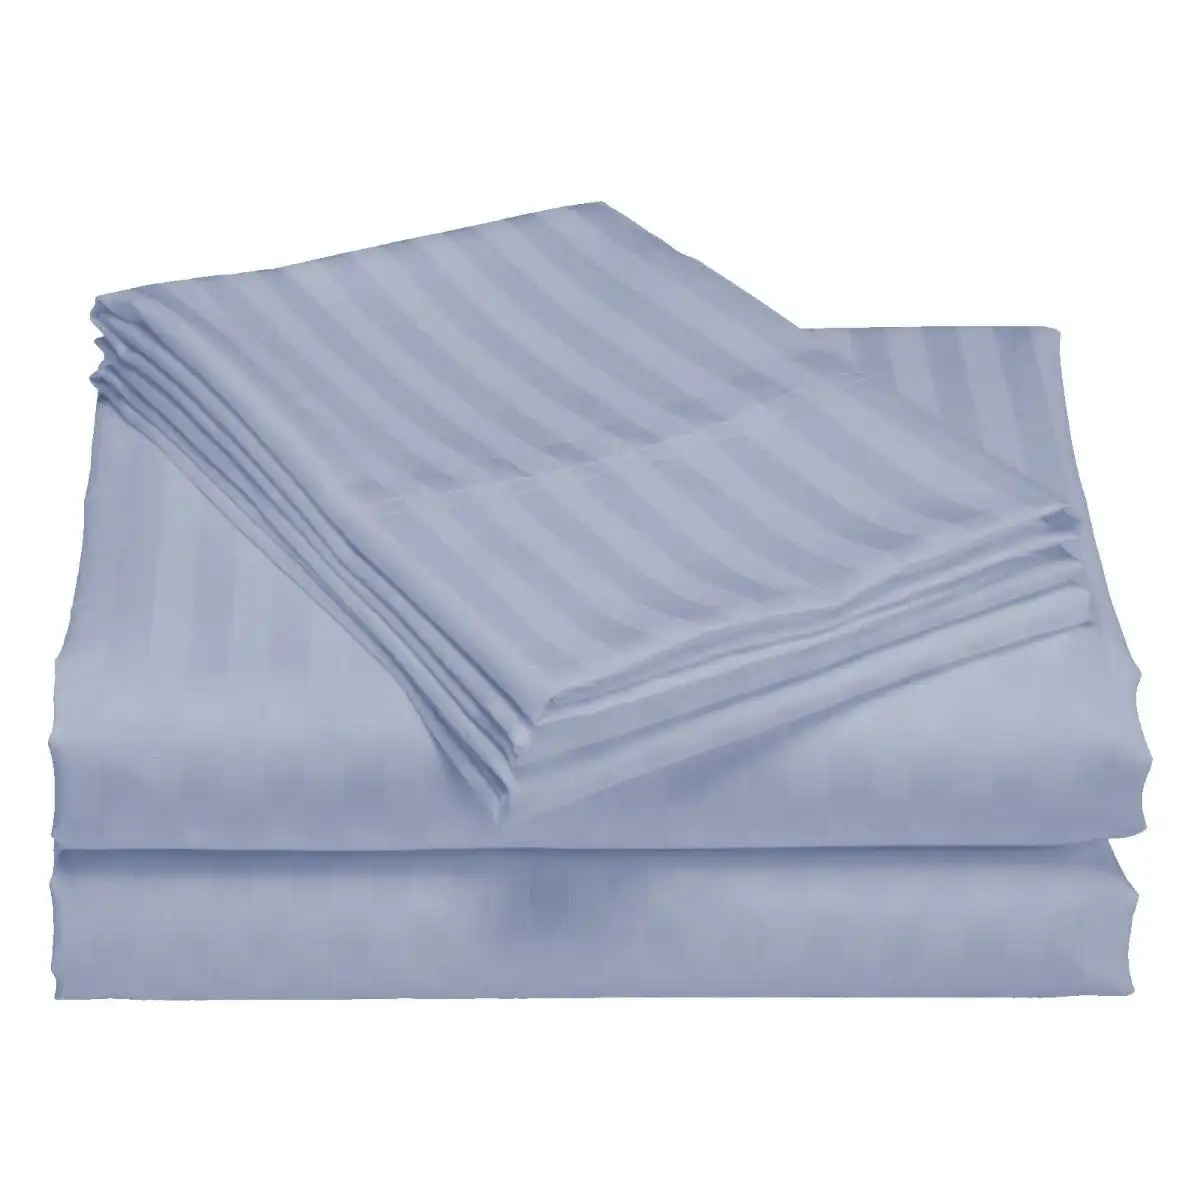 Royal Comfort 1200Tc Quilt Cover Set Damask Cotton Blend Luxury Sateen Bedding - King Blue Fog - One Size